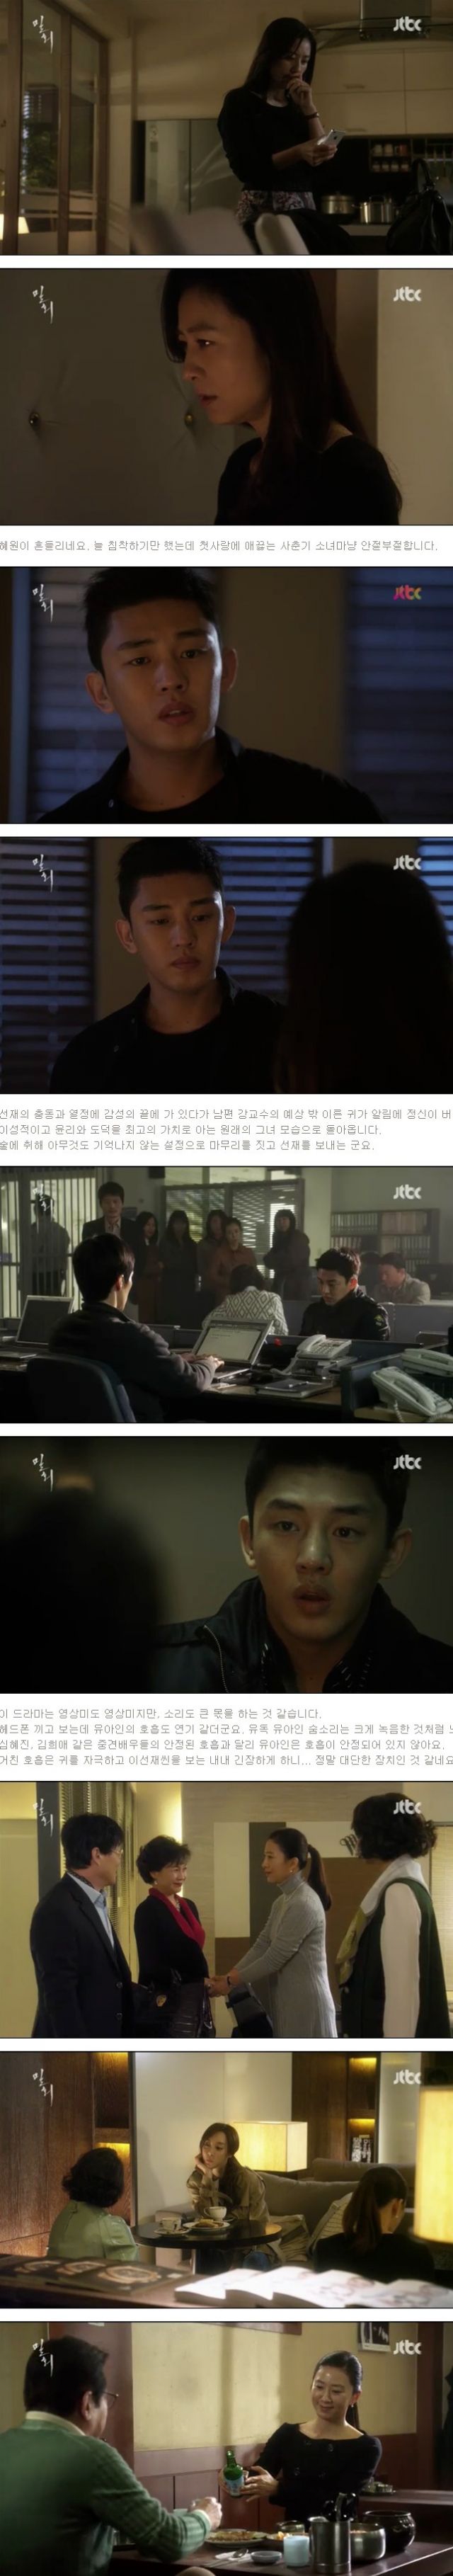 episode 4 captures for the Korean drama 'Secret Love Affair'